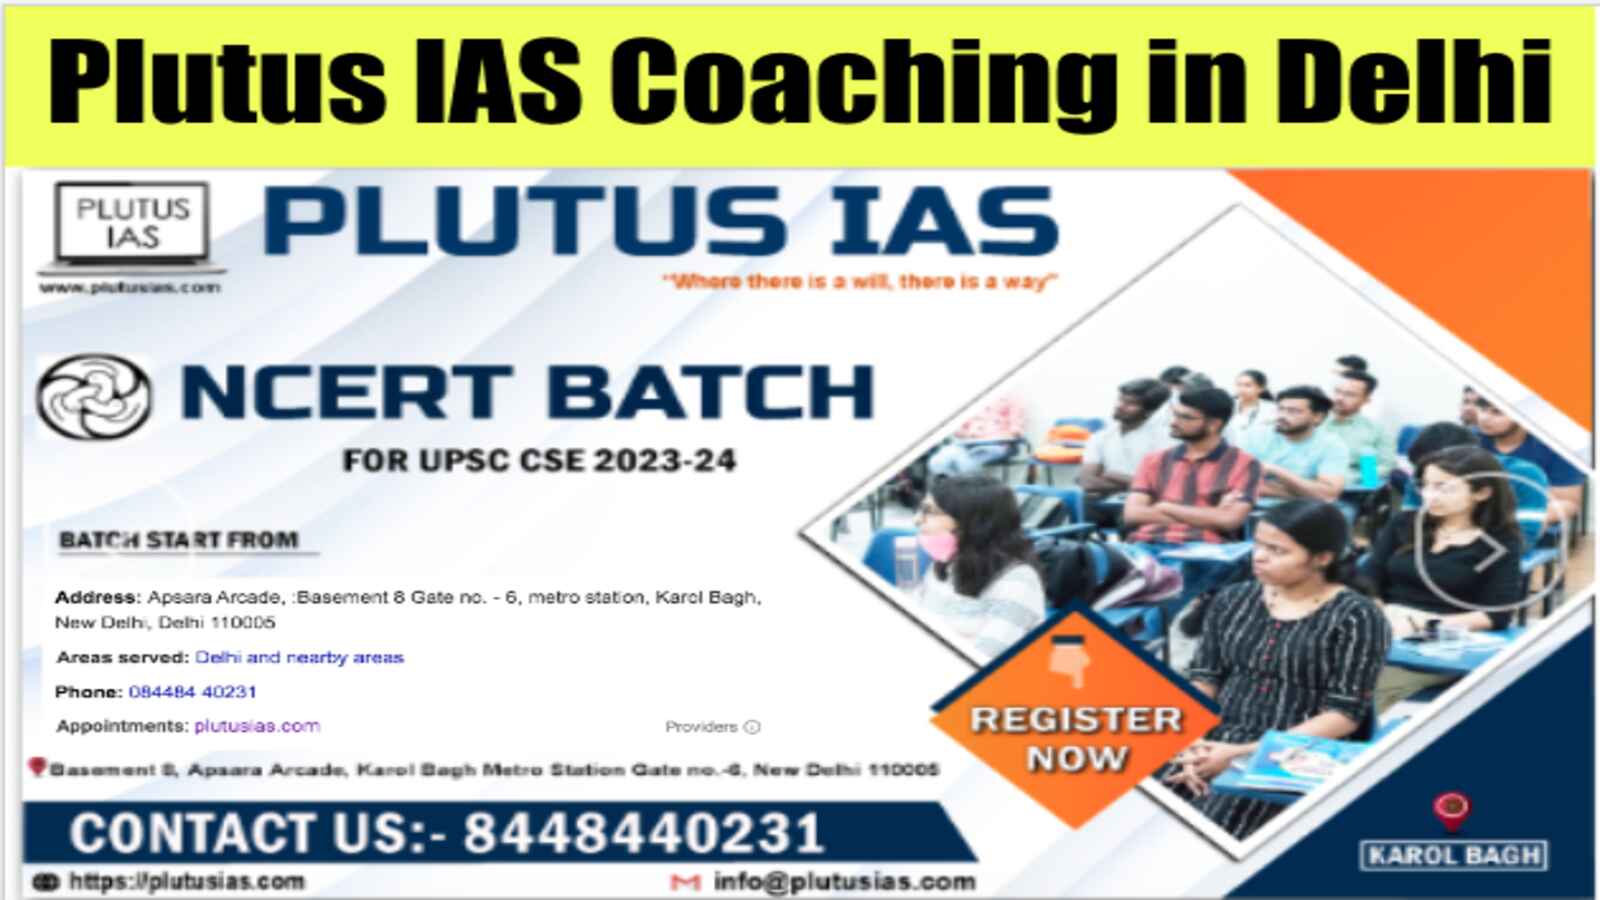 Plutus IAS Best Classroom coaching in Karol Bagh